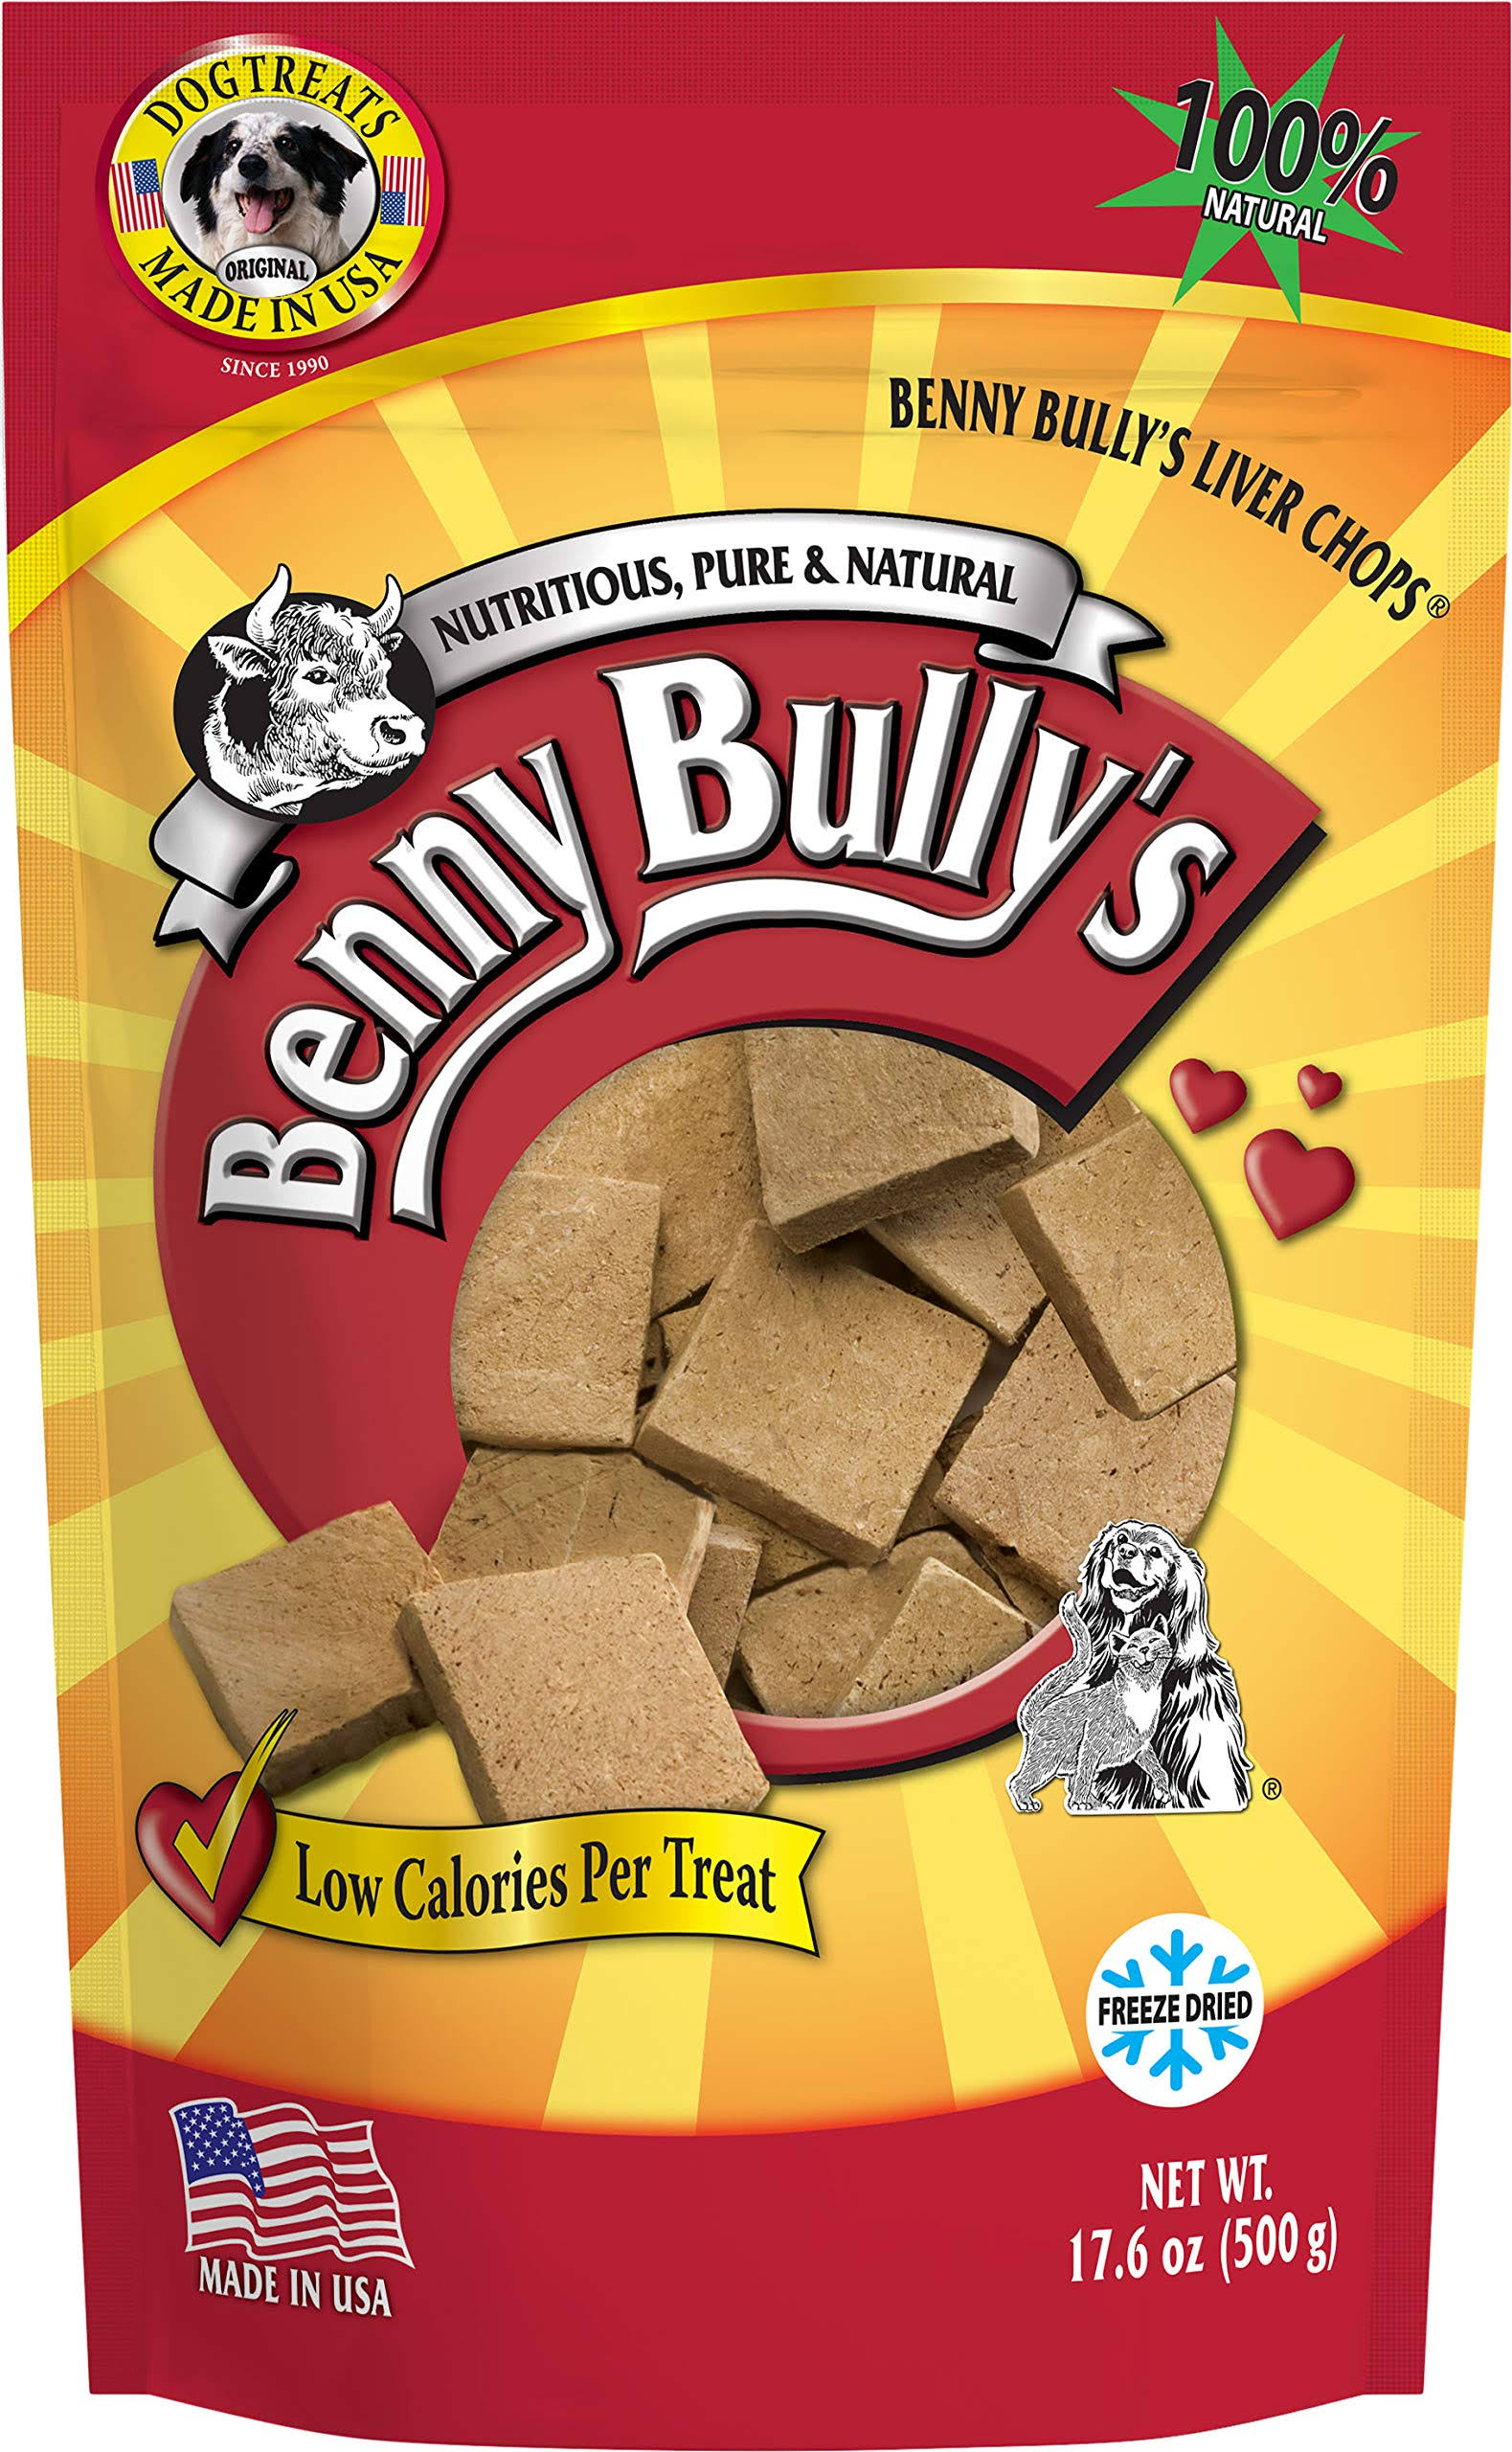 Benny Bullys Liver Chops Original Dog Treats - 500g